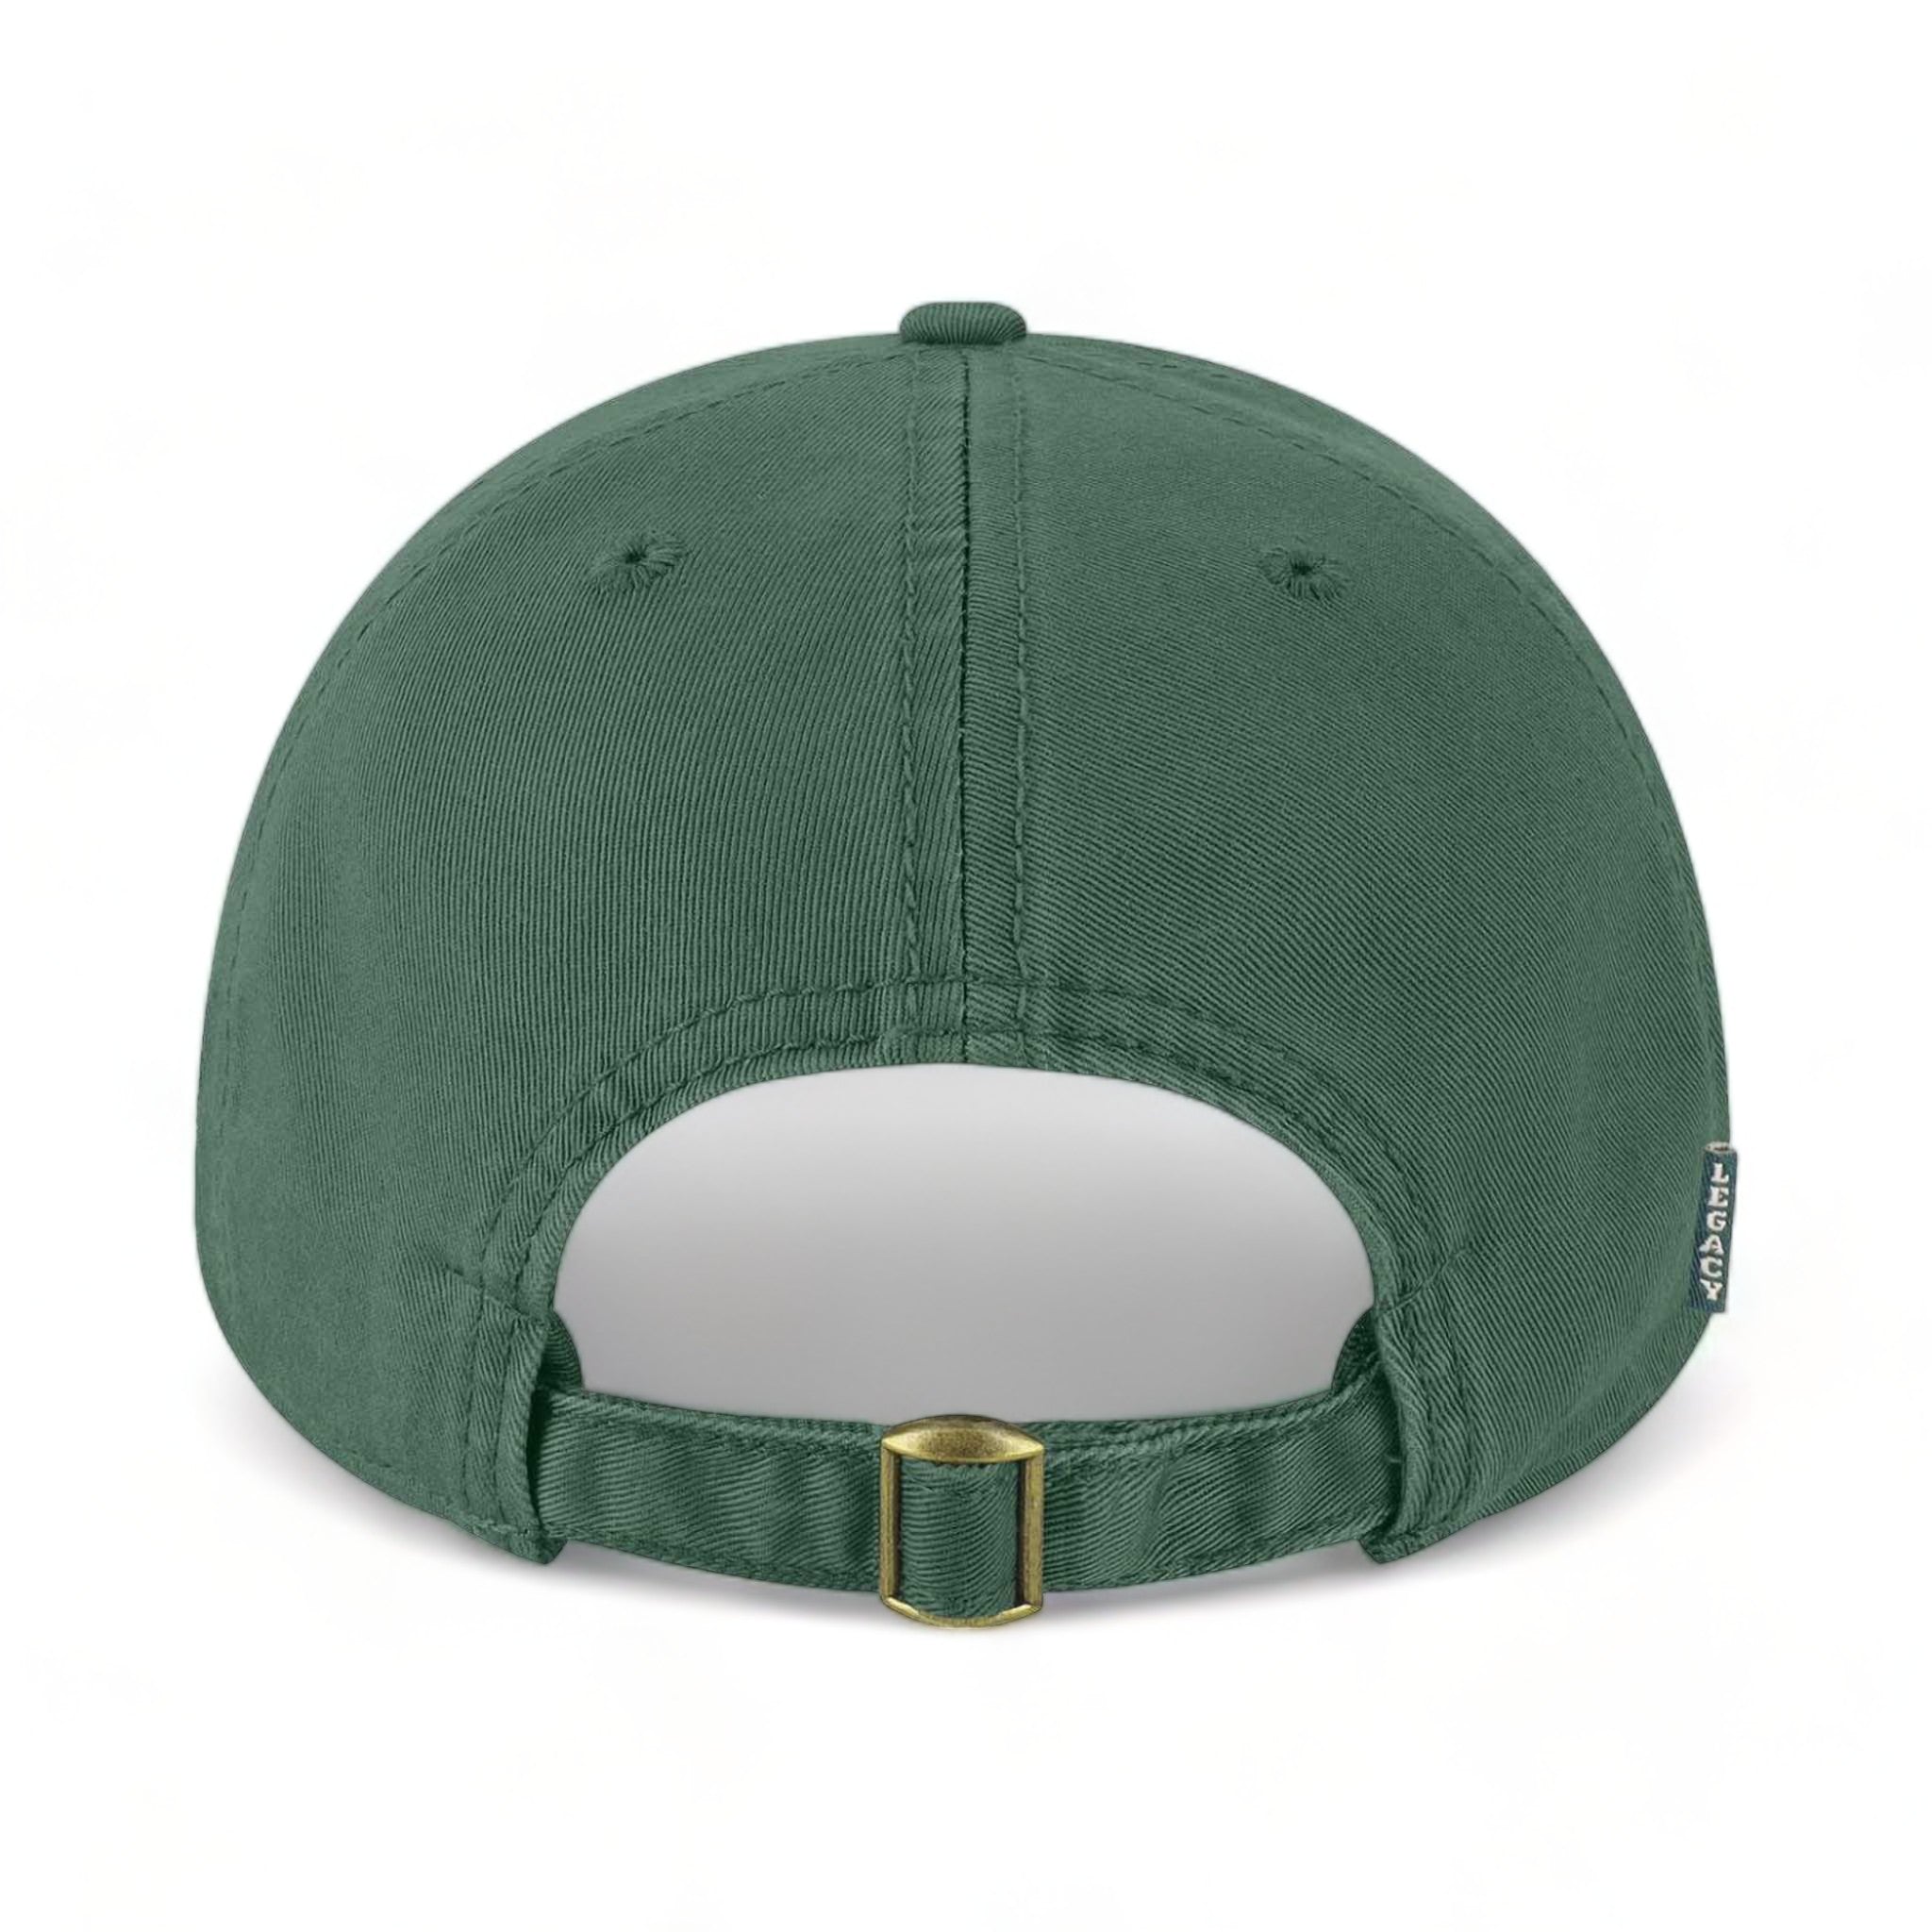 Back view of LEGACY EZA custom hat in spruce green